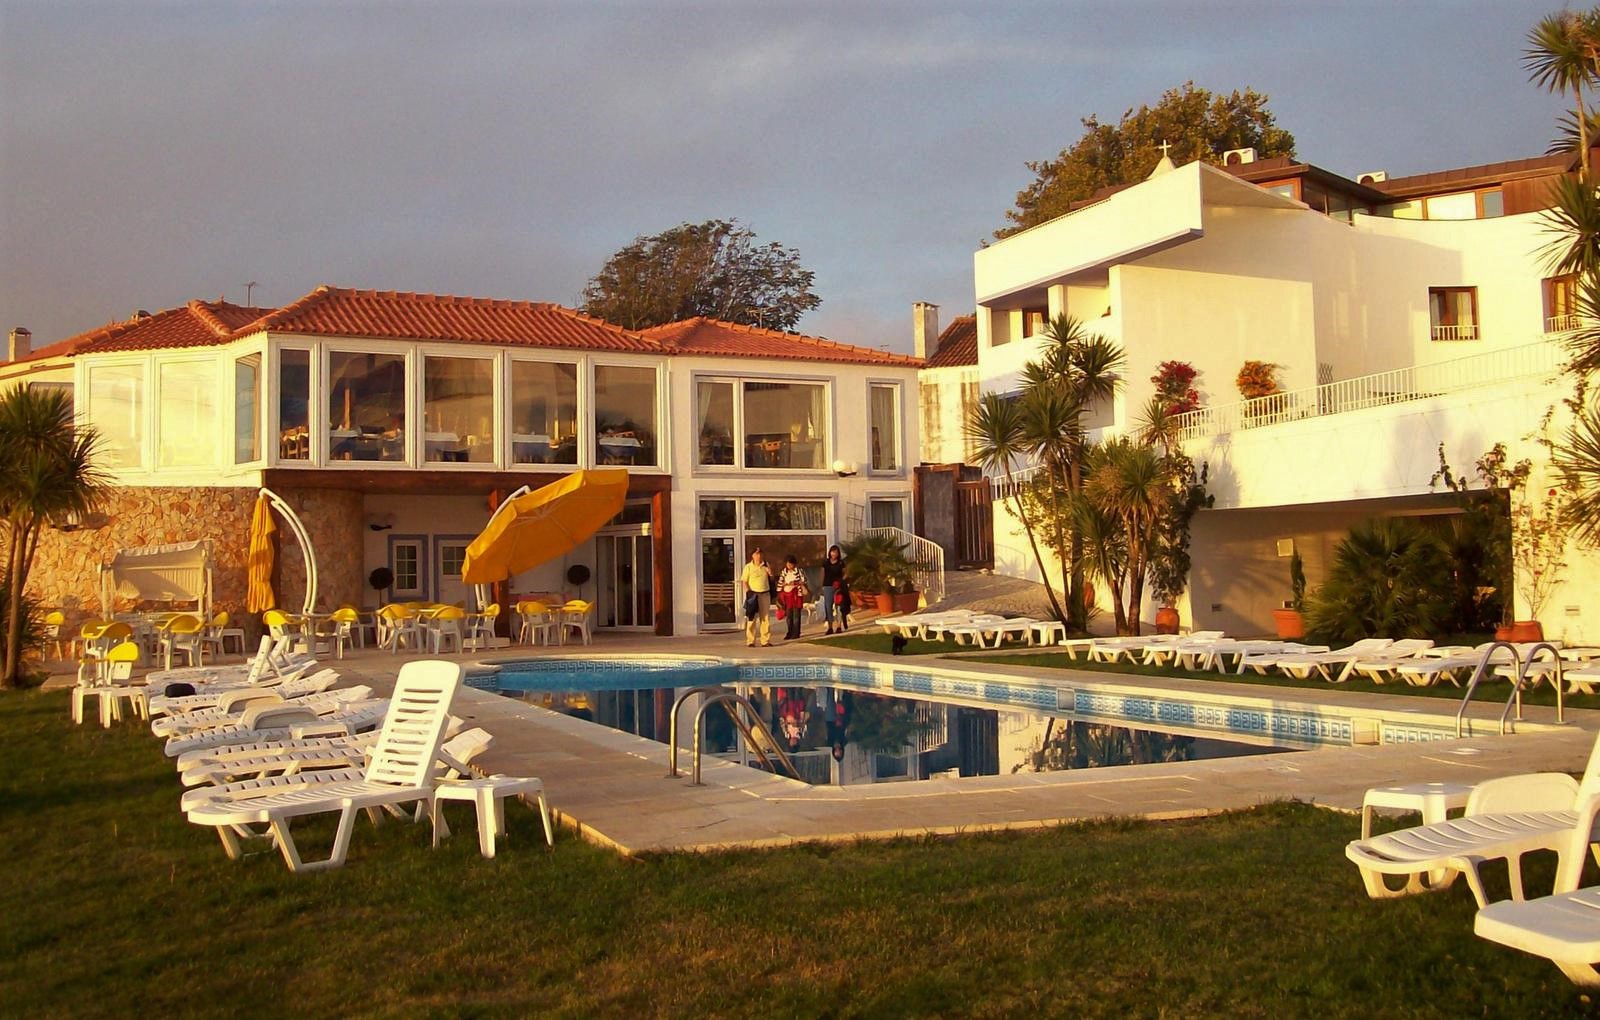 Hotel Miramar - Nazaré in Portugal